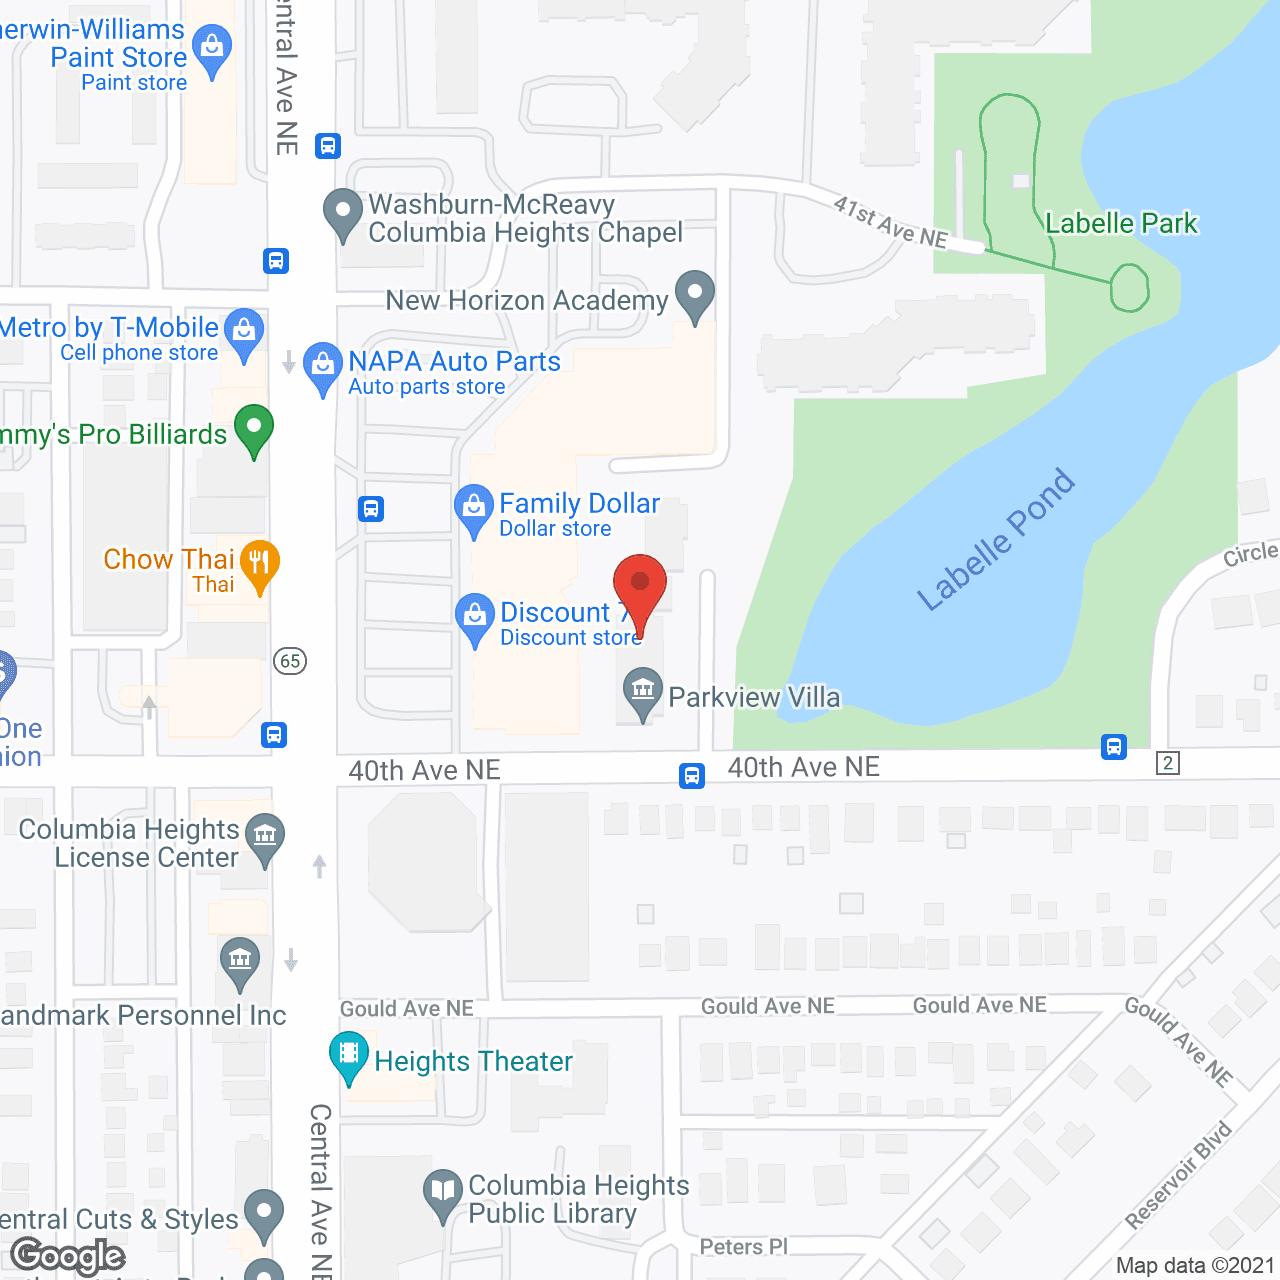 Parkview Villa in google map